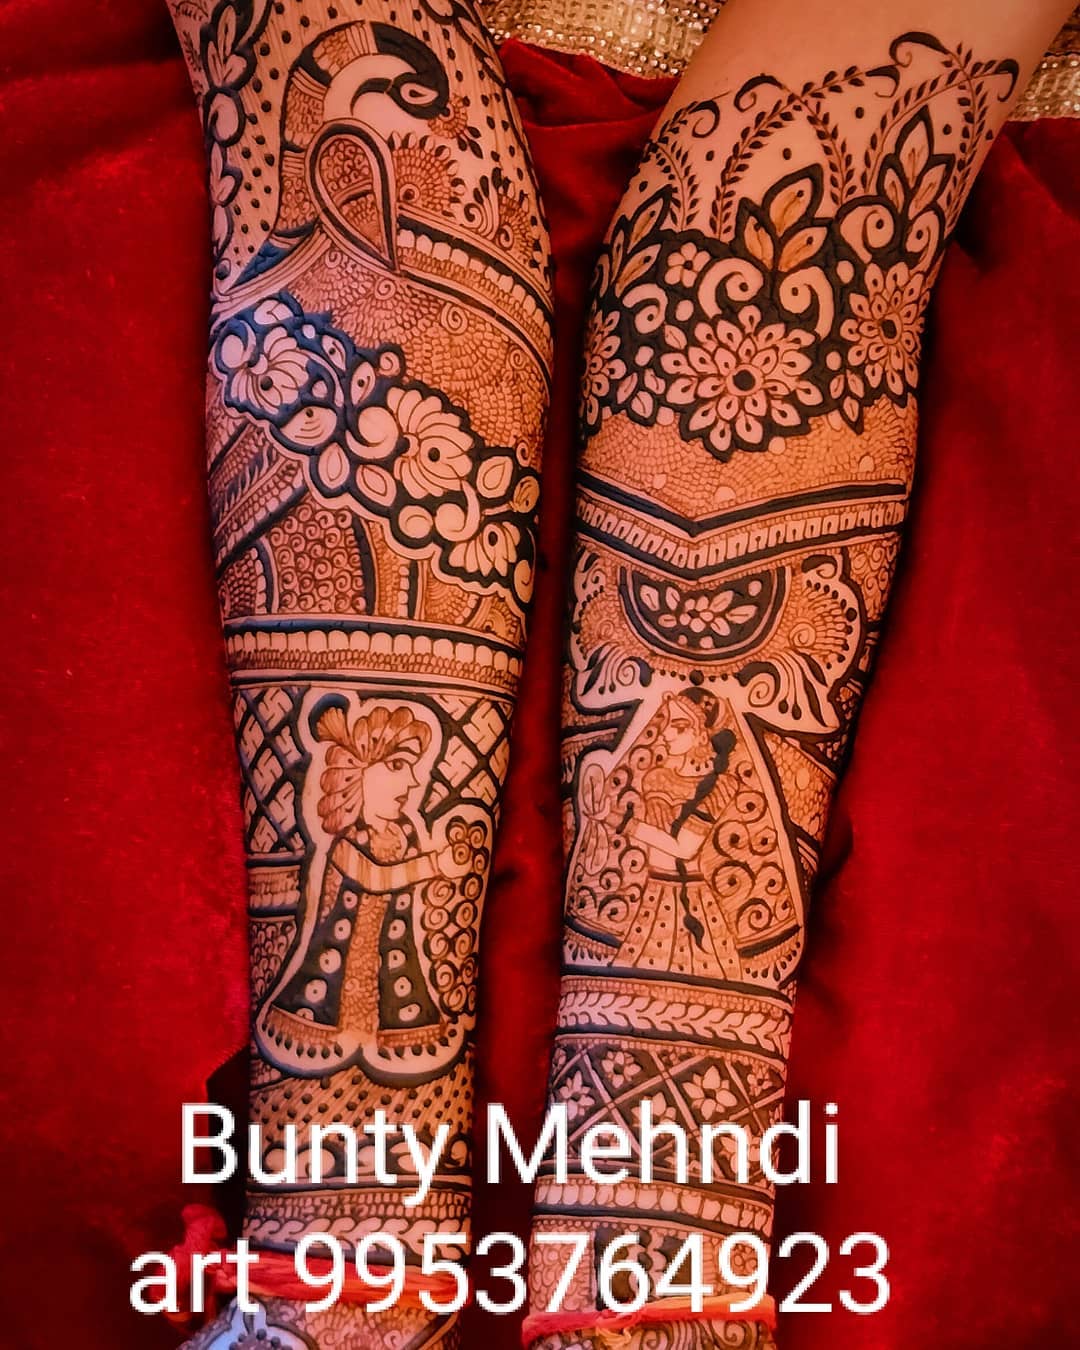 Bunty Mehandi - Delhi NCR | Price & Reviews